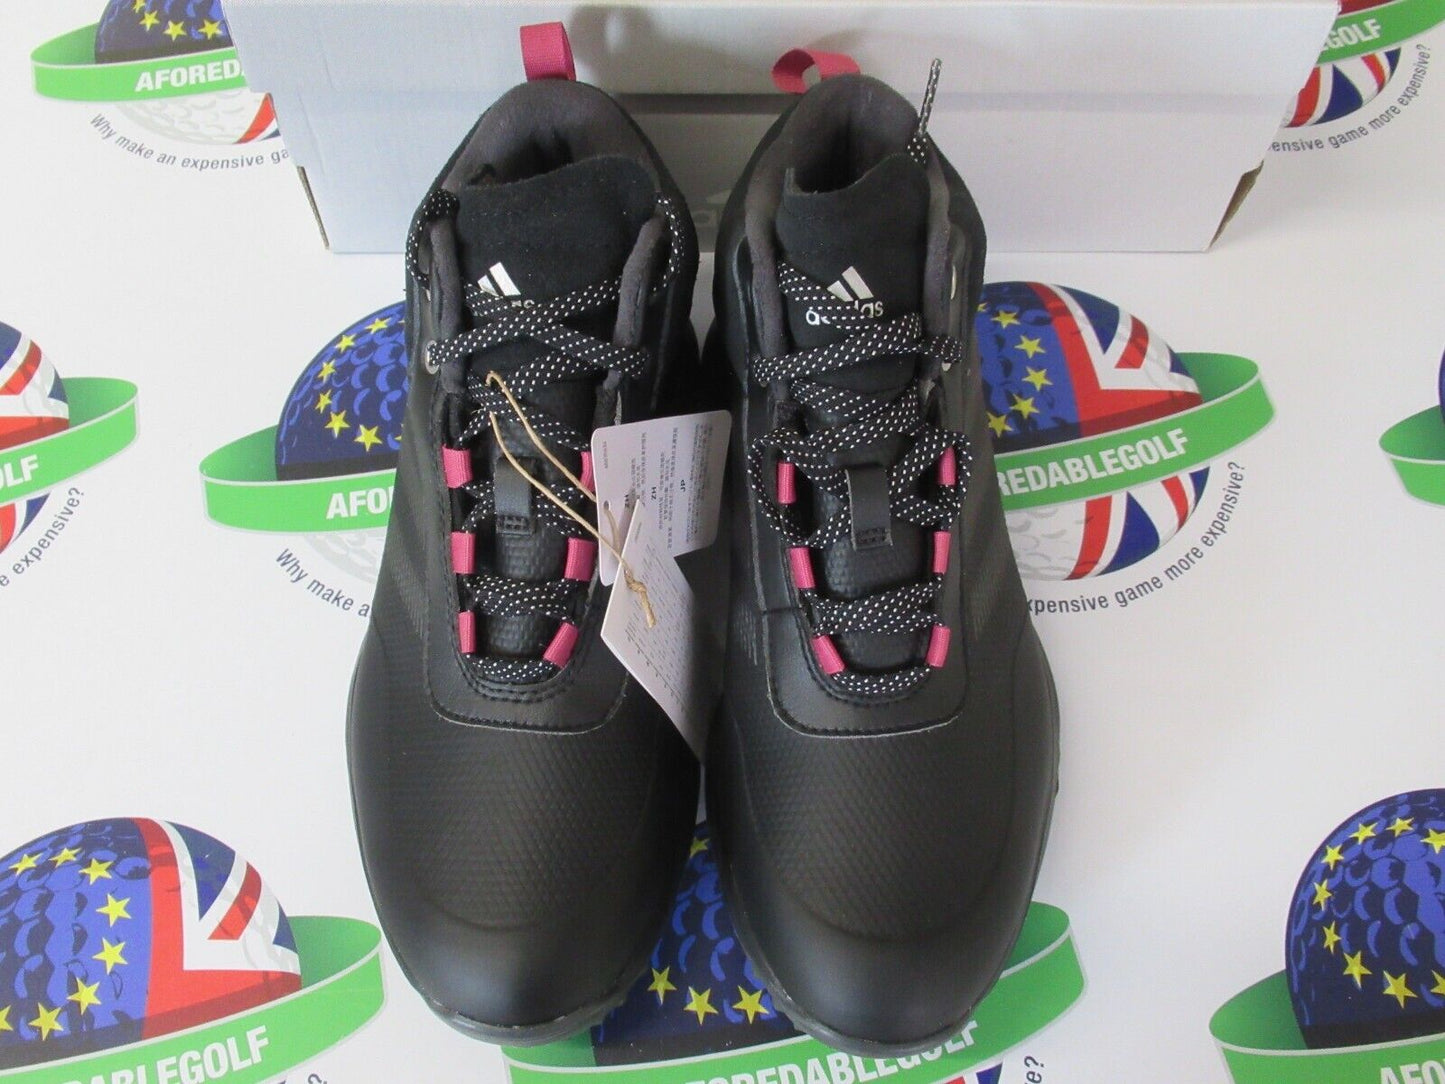 adidas womens s2g mid waterproof golf boots uk size 4 medium